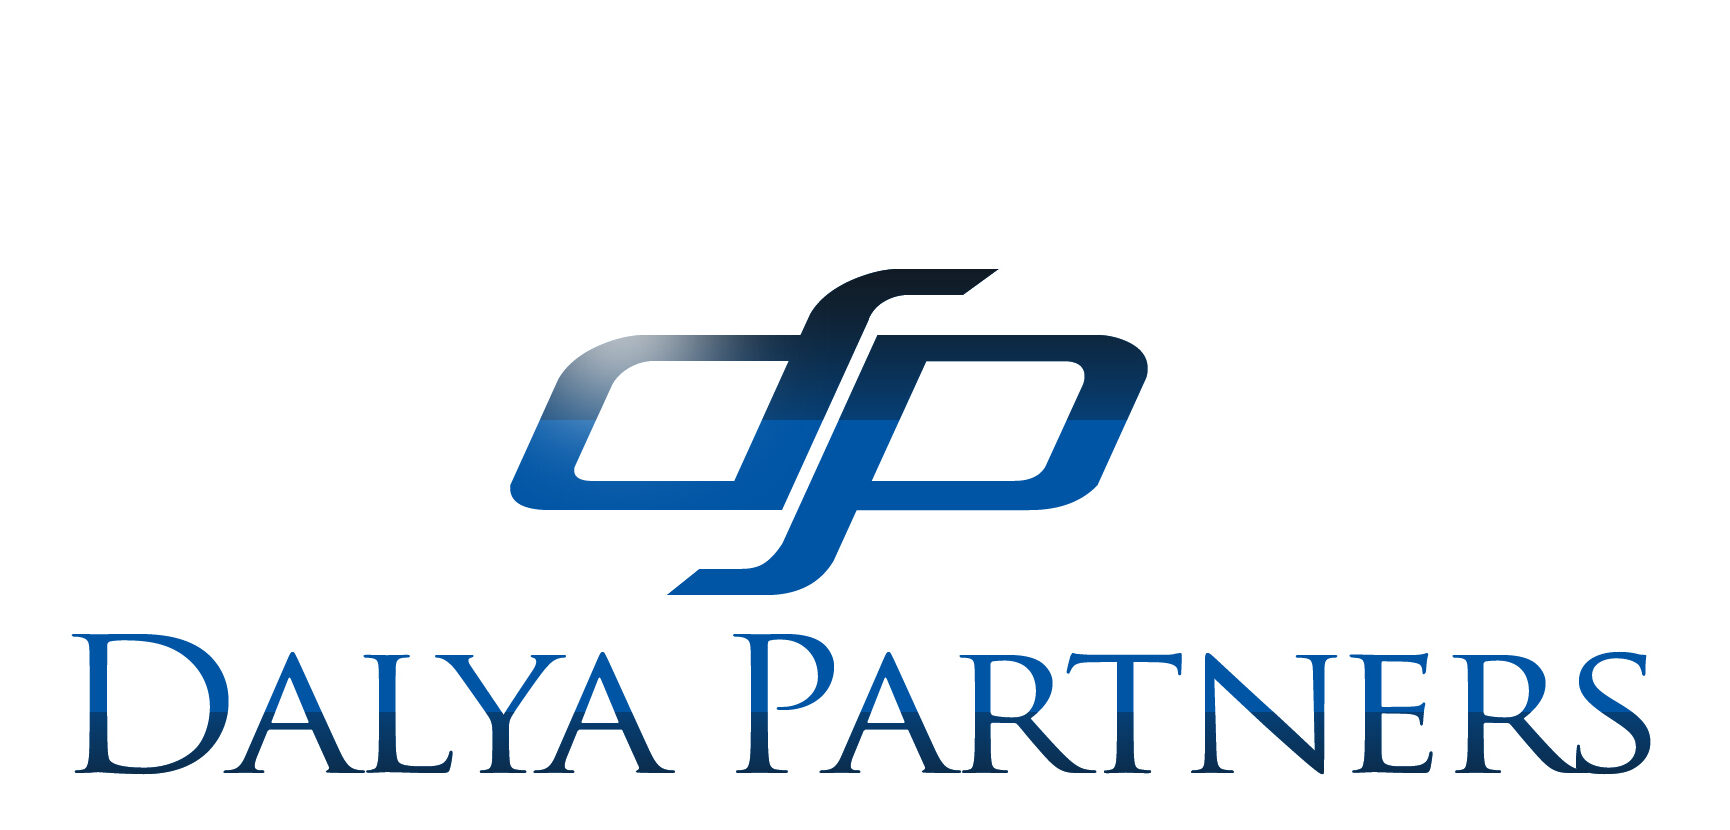 Dalya Partners